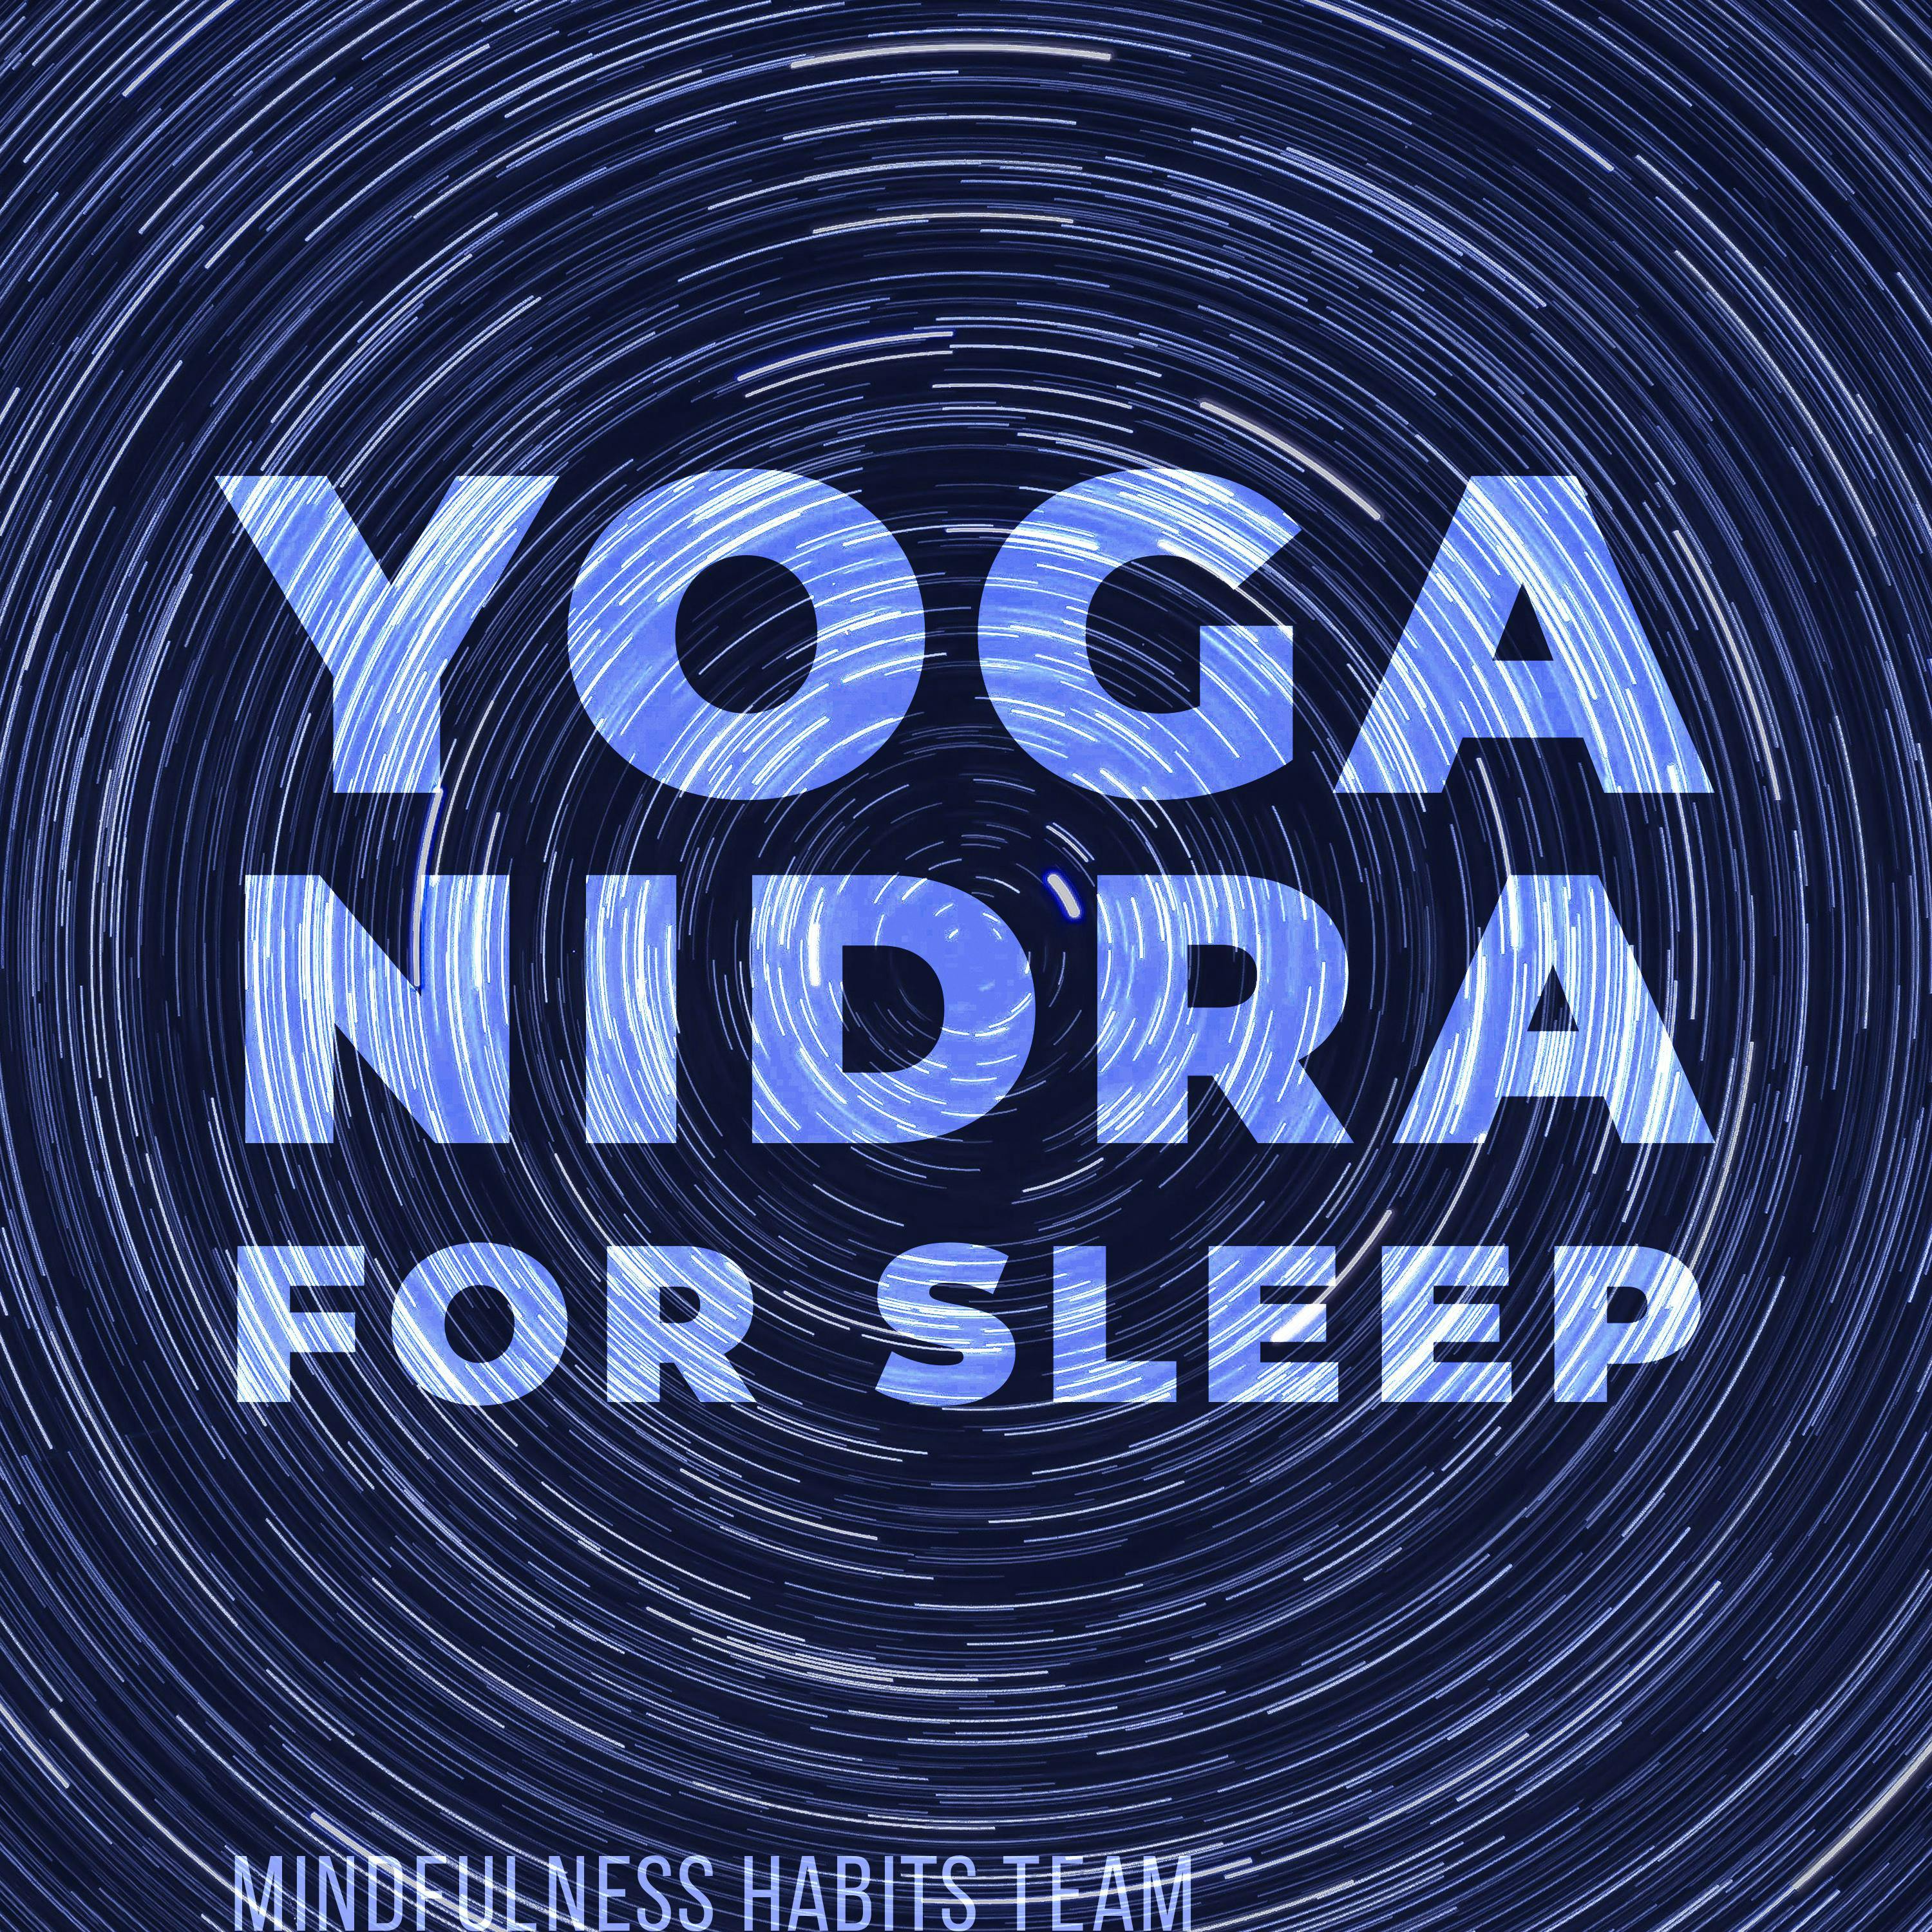 Yoga Nidra for Sleep: Guided Meditation for Deep, Transcendental Sleep - undefined